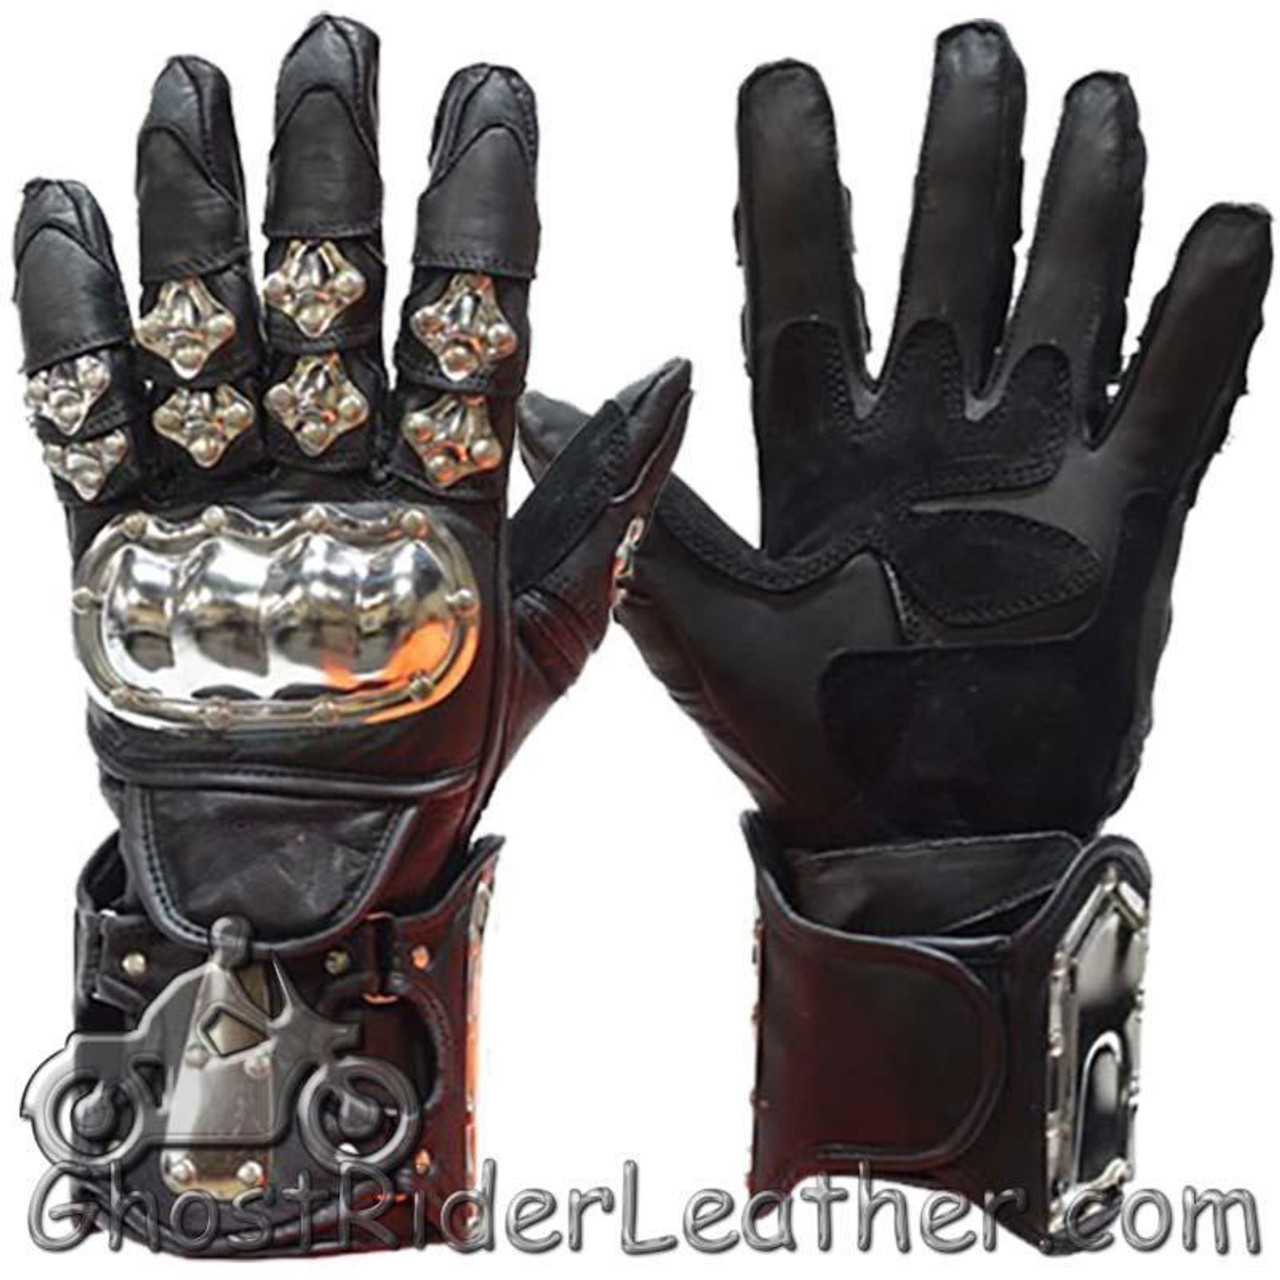 Studded Fingerless Biker Leather Motorcycle Gloves - SKU GRL-GL2010-DL -  Ghost Rider Leather